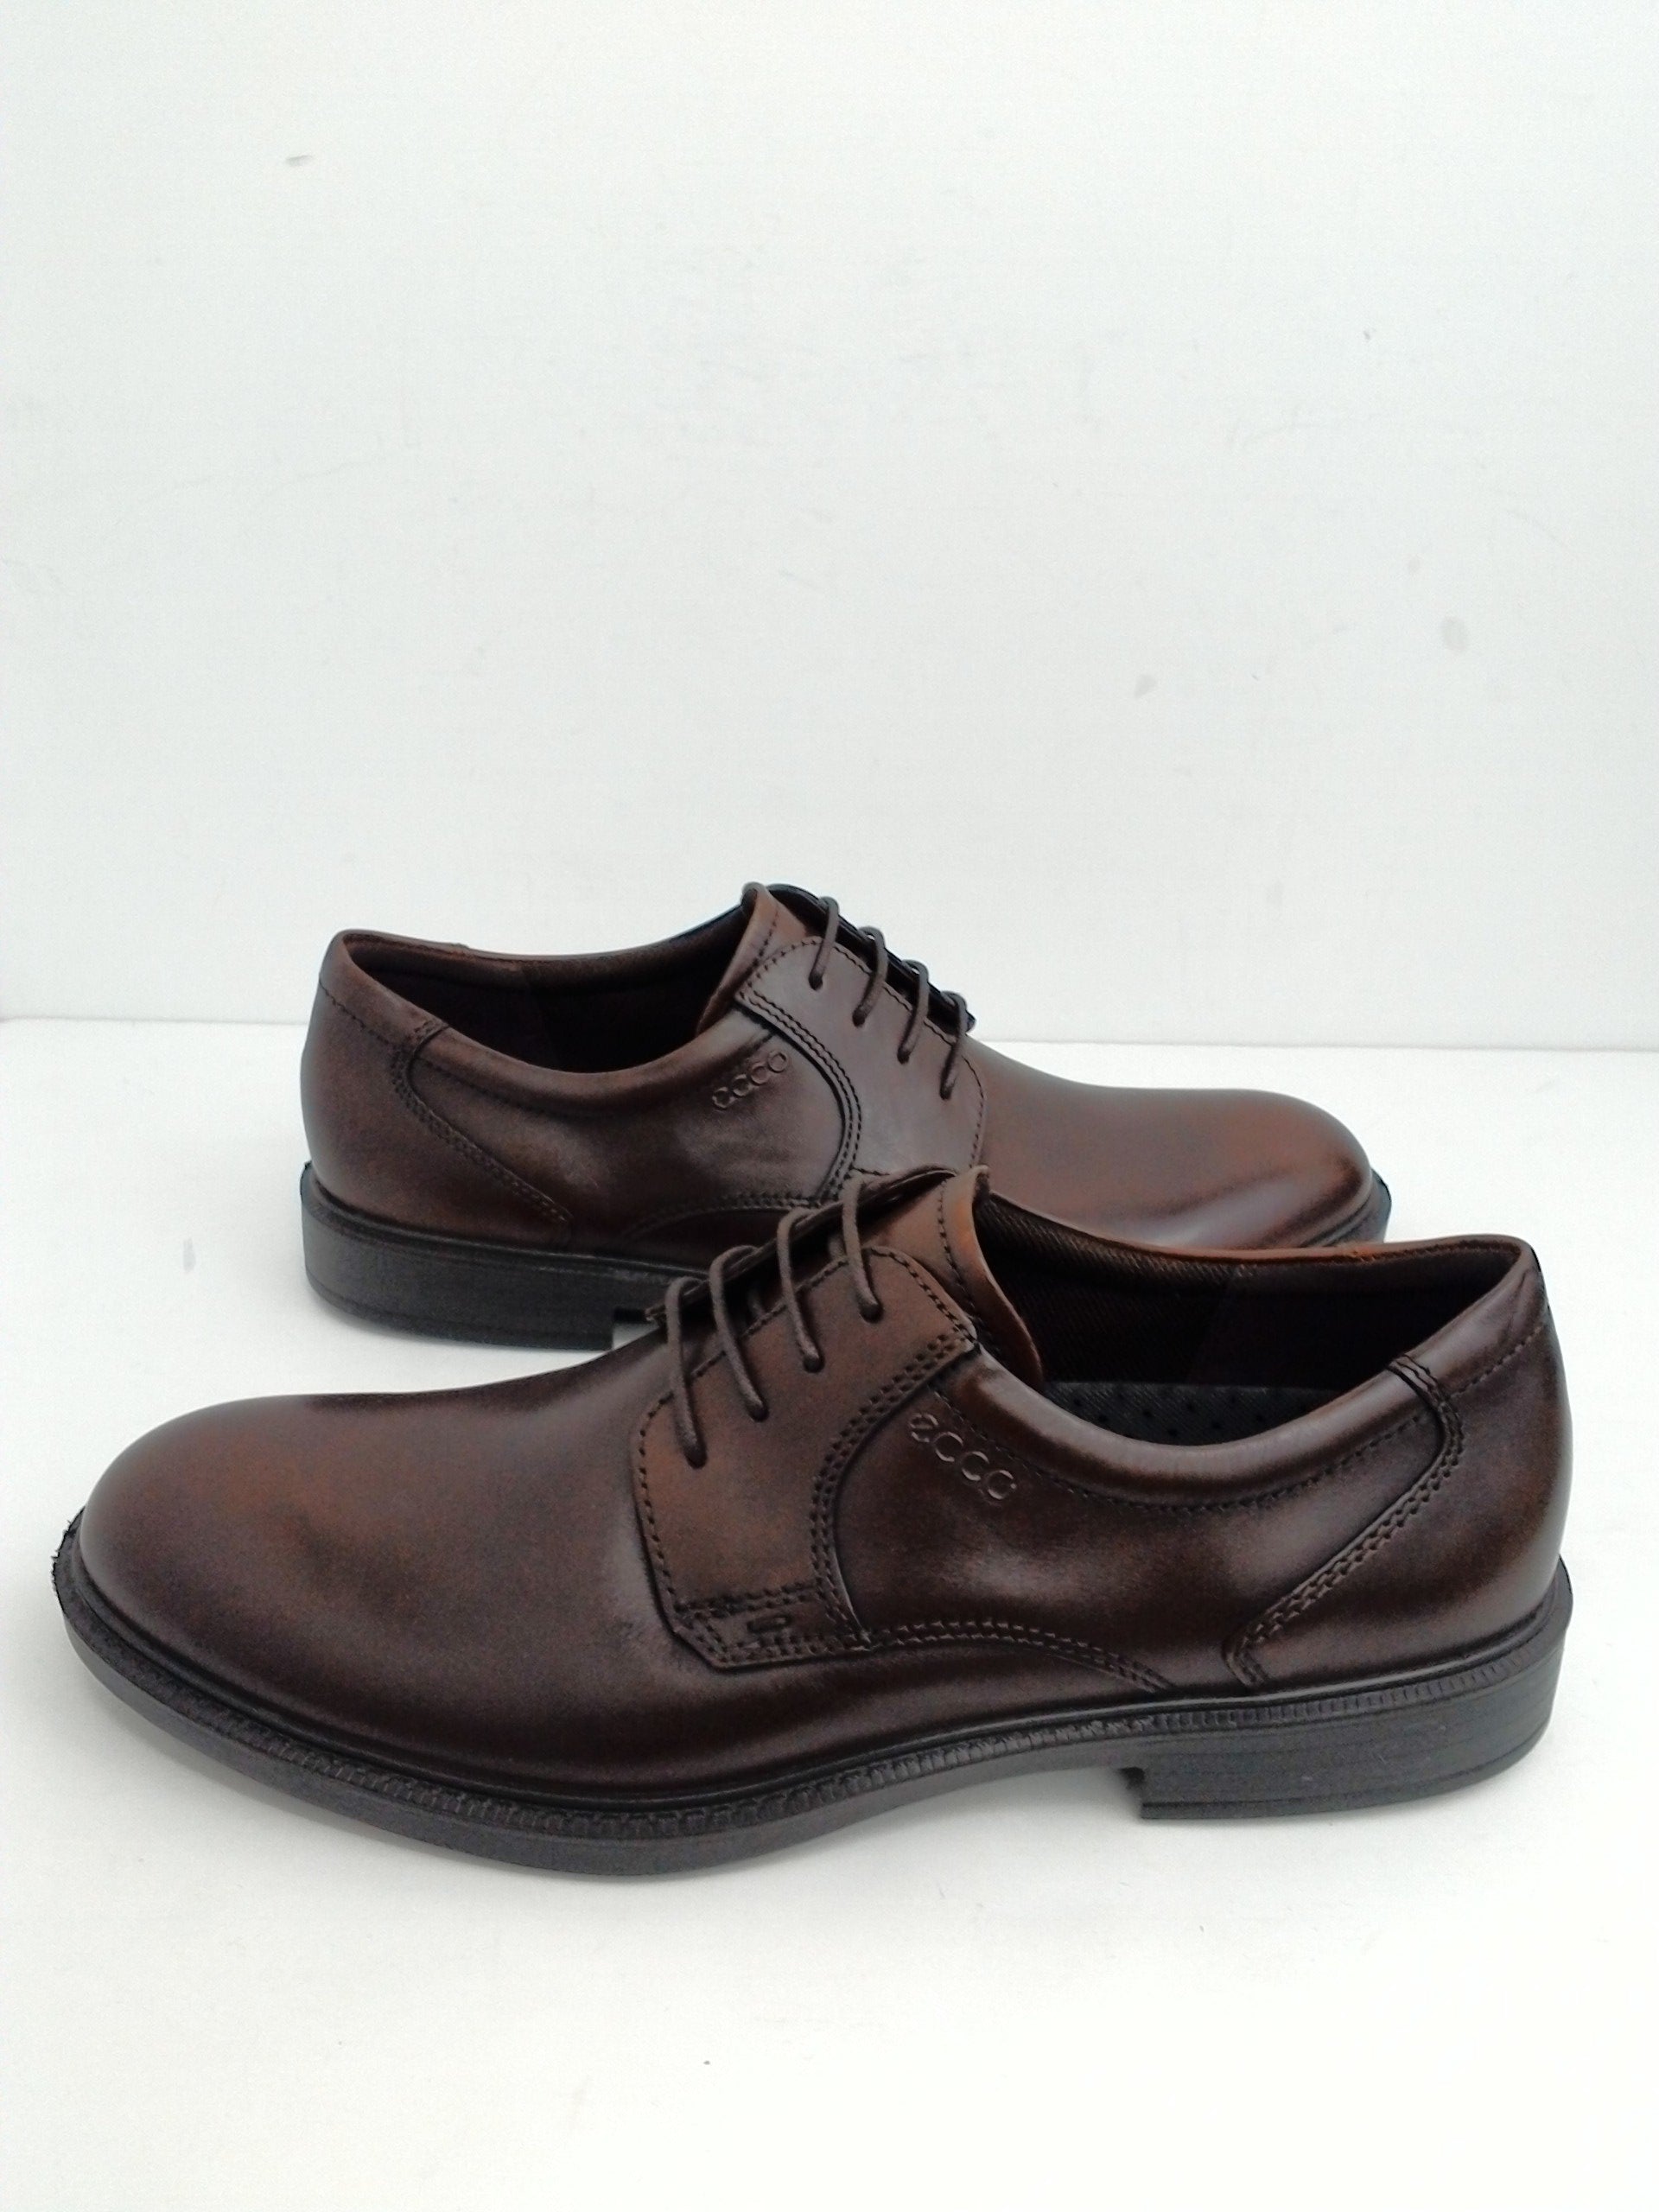 Ecco Men's Plain-Toe Oxfords , Leather, Dark Brown, Size 13 M (47 ...